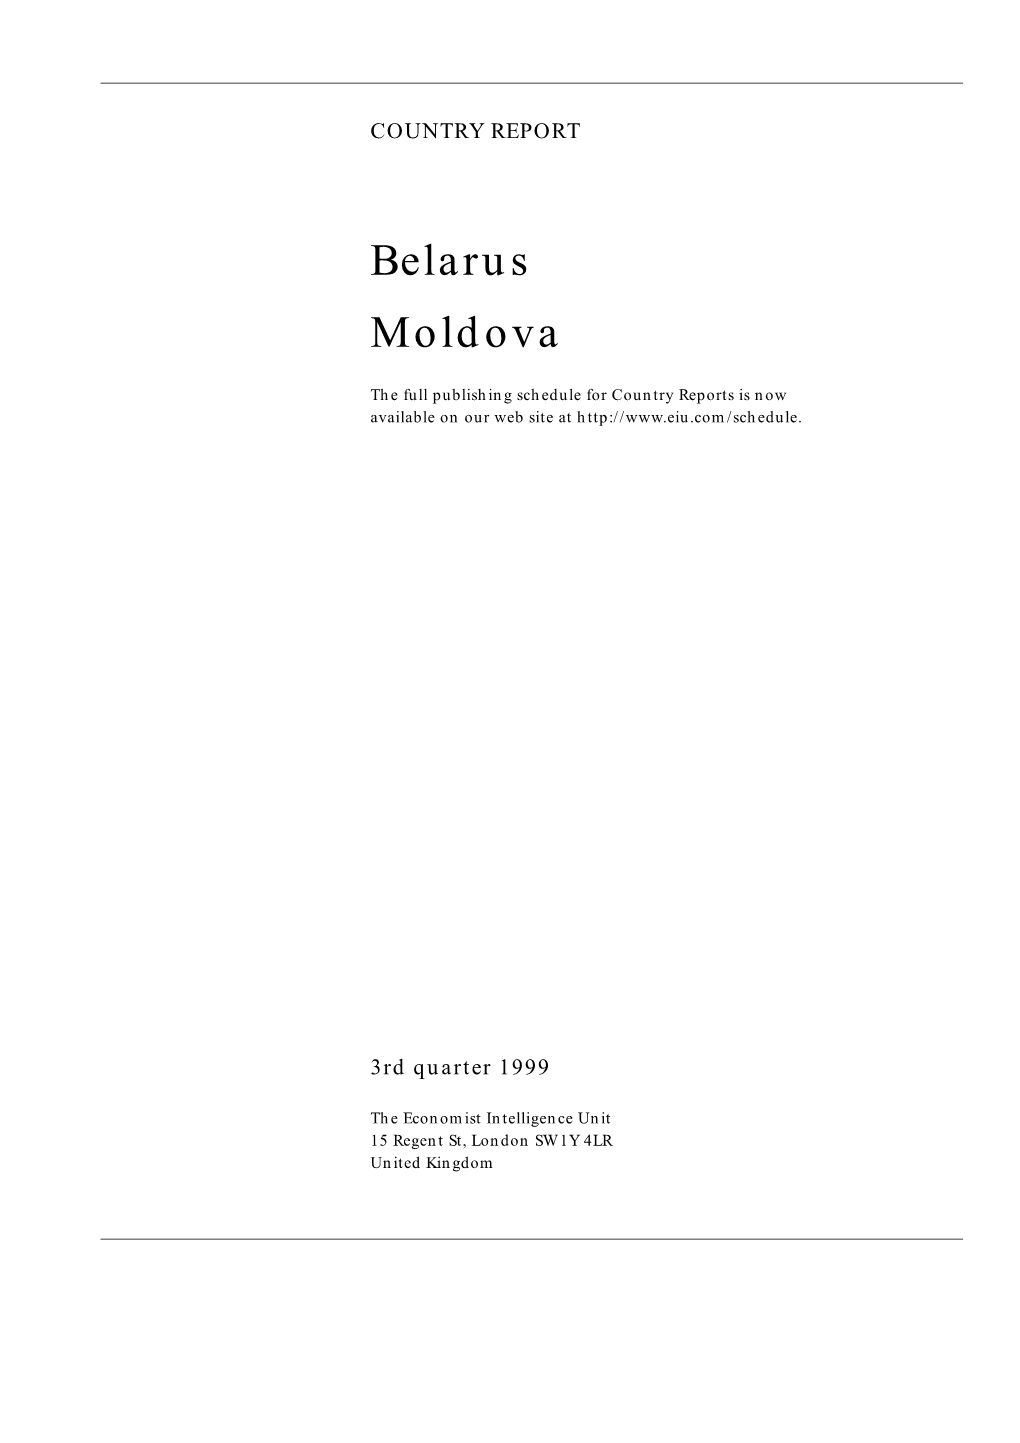 Belarus Moldova